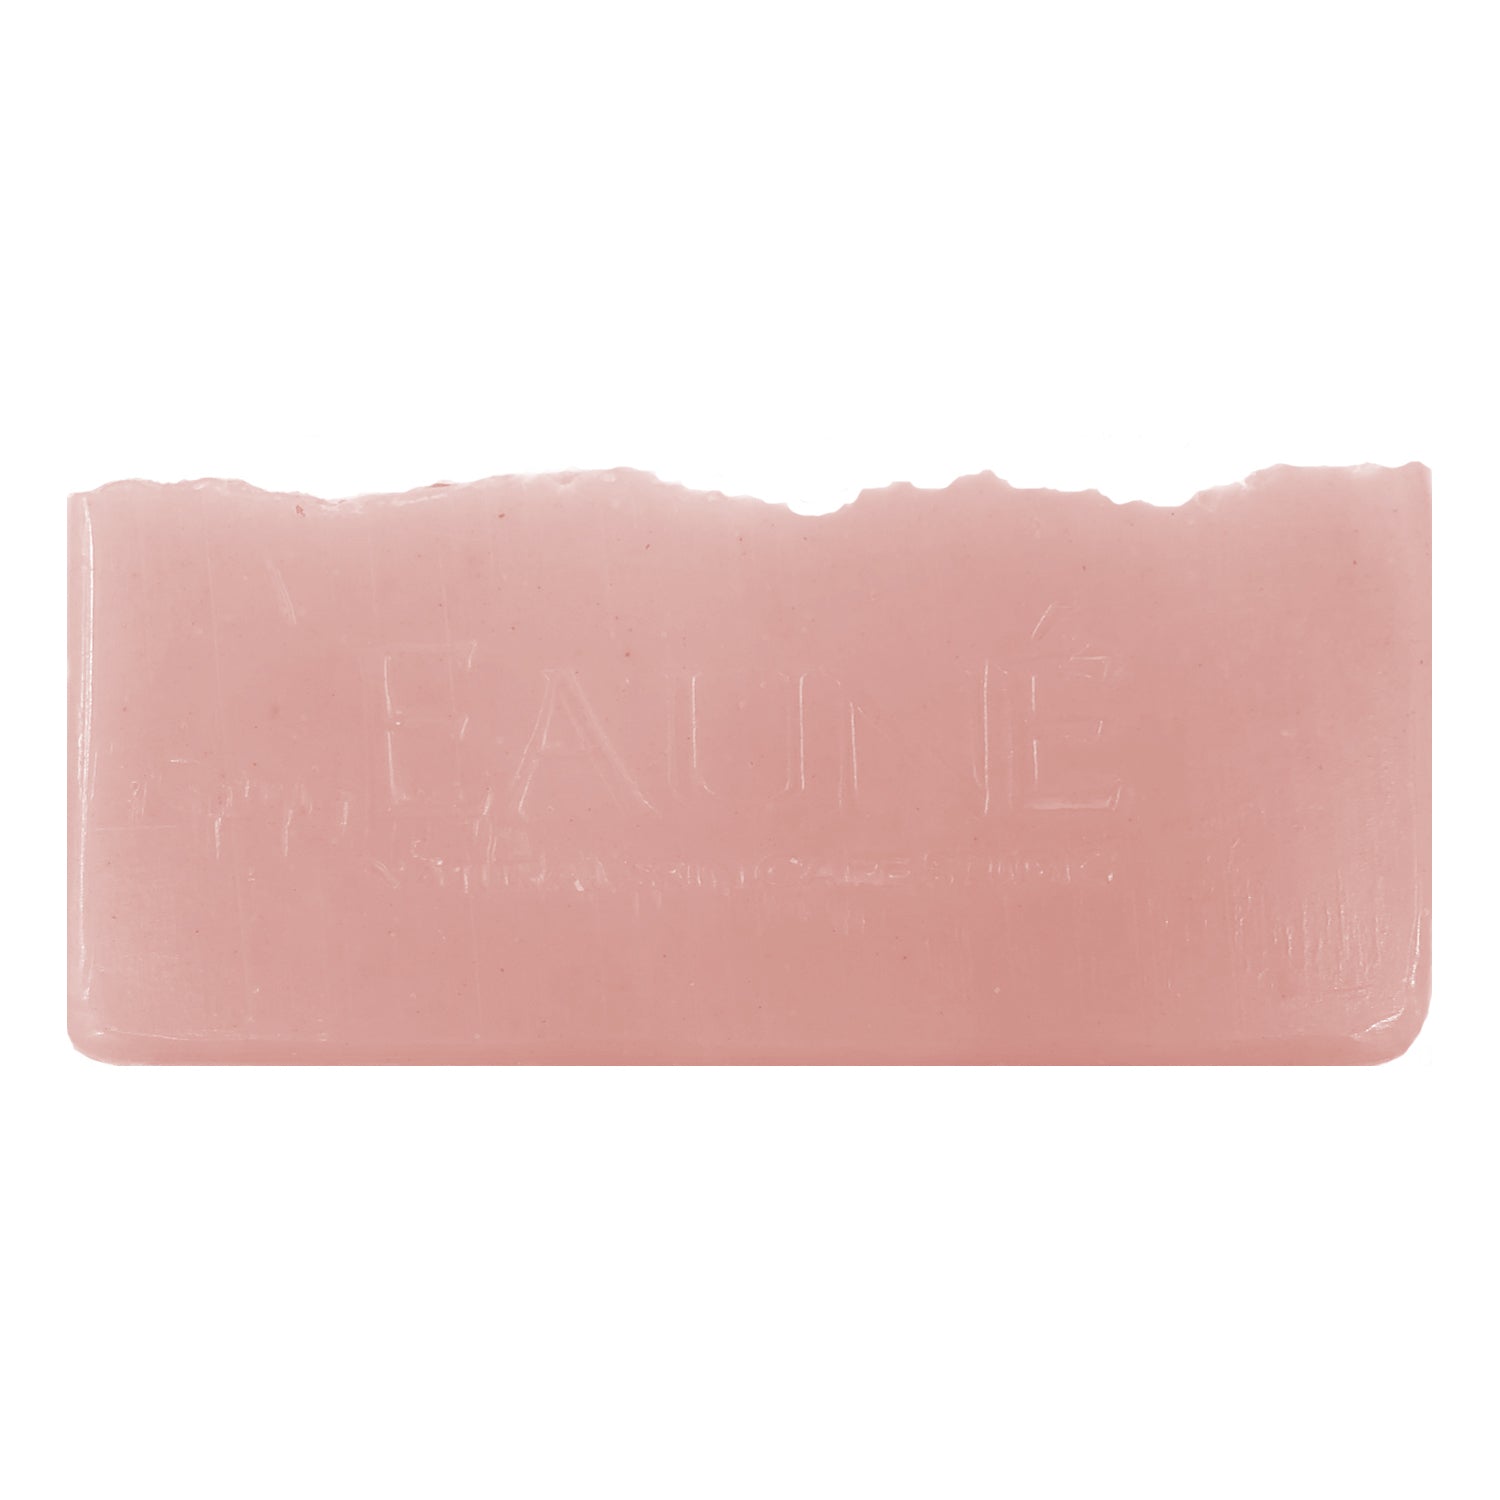 Organic Soap - Silky Smooth